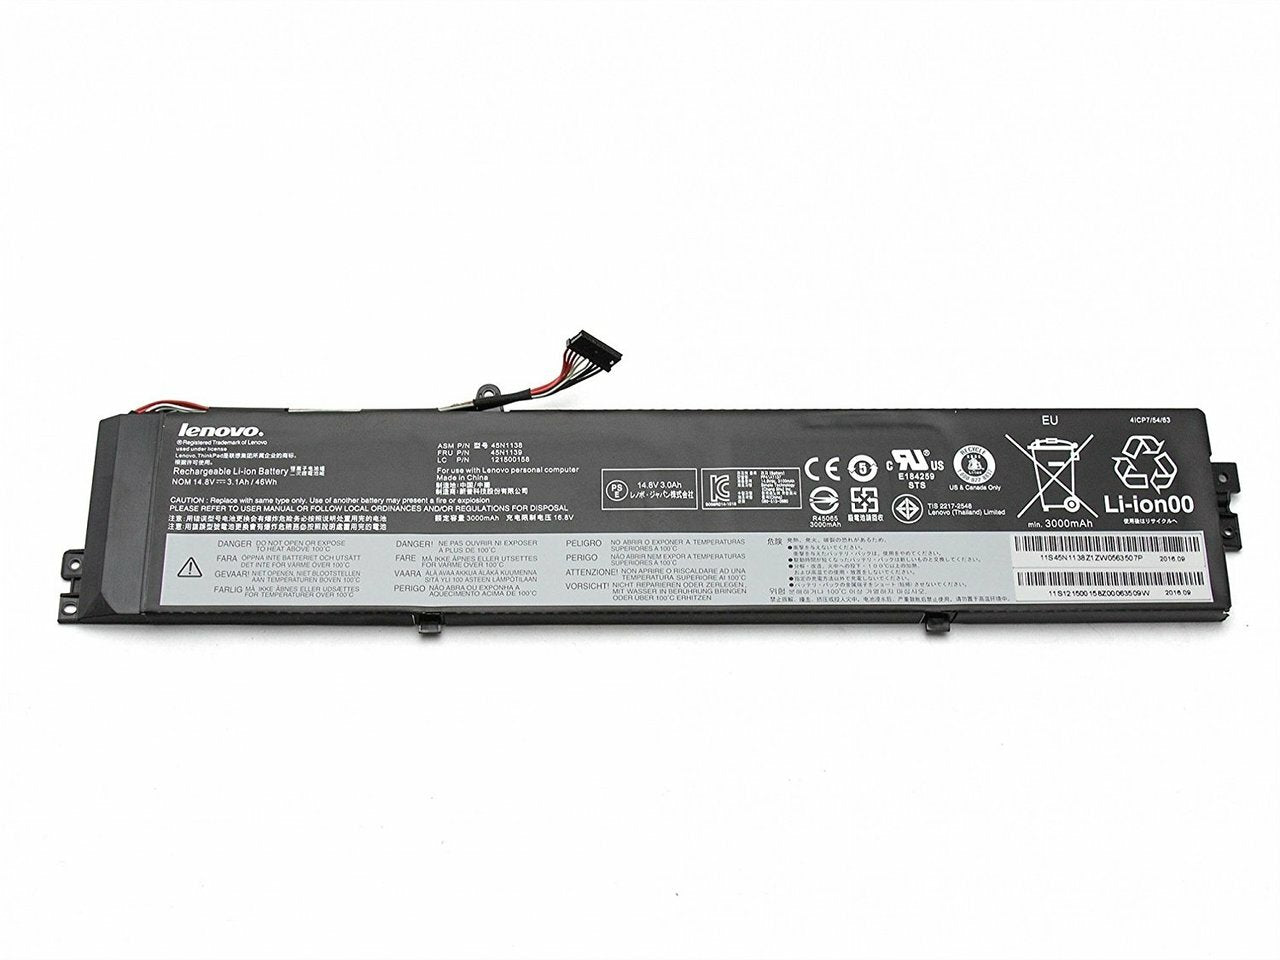 Lenovo ThinkPad S440 V4400u 45N1138 45N1139 45N1140 45N1141 4 Cell Laptop Battery